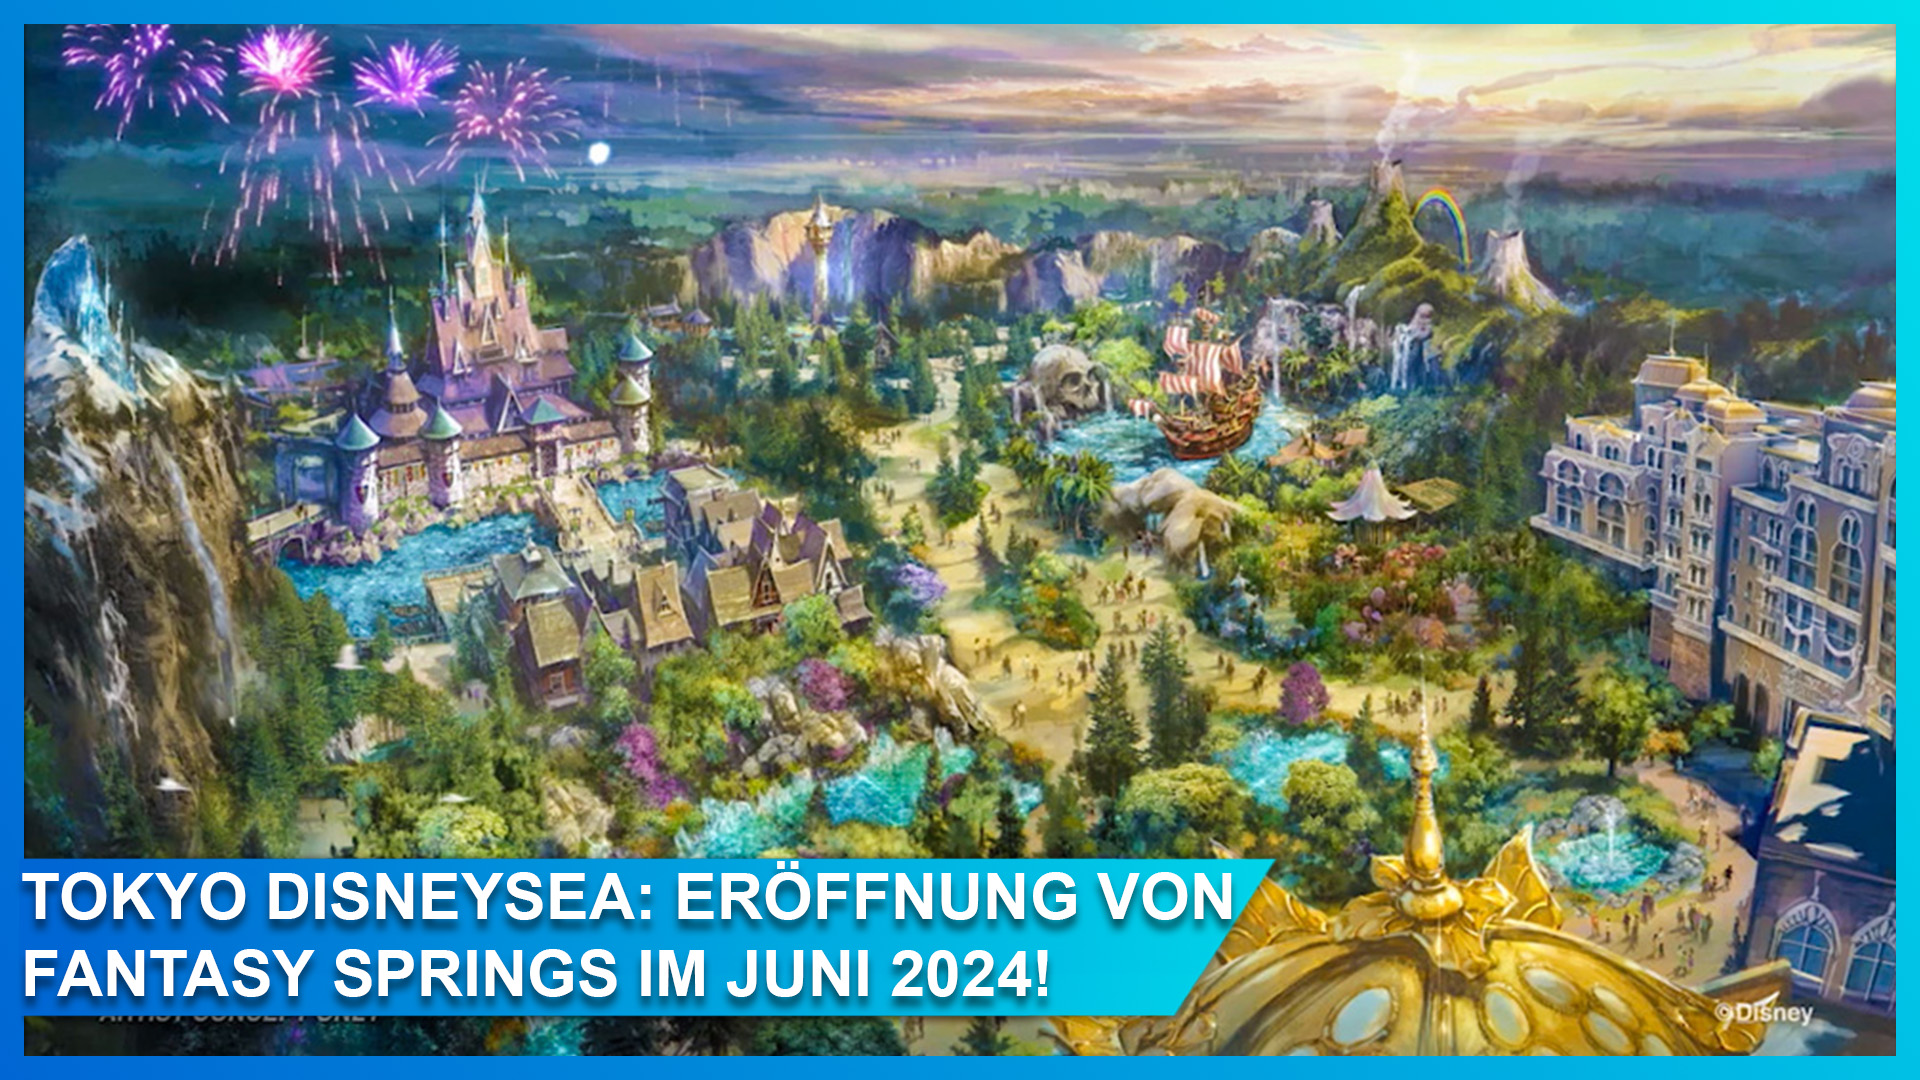 Update: Tokyo DisneySea: Fantasy Springs eröffnet am 6. Juni 2024 mit “Frozen”, “Rapunzel” und “Peter Pan” Welten!